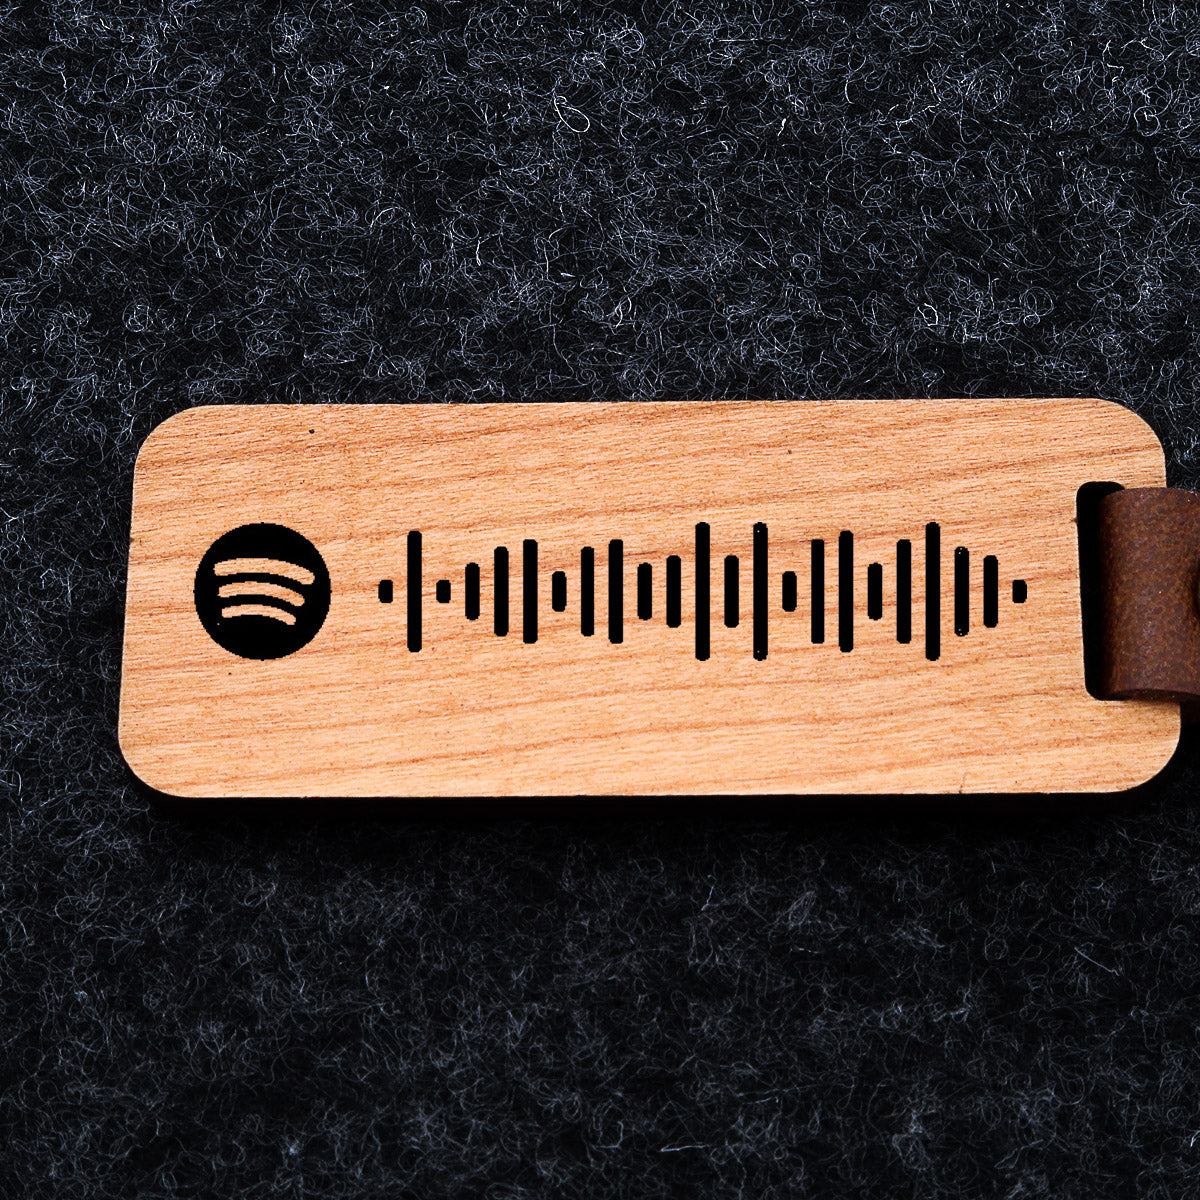 Porte-clés Spotify en bois avec code Spotify